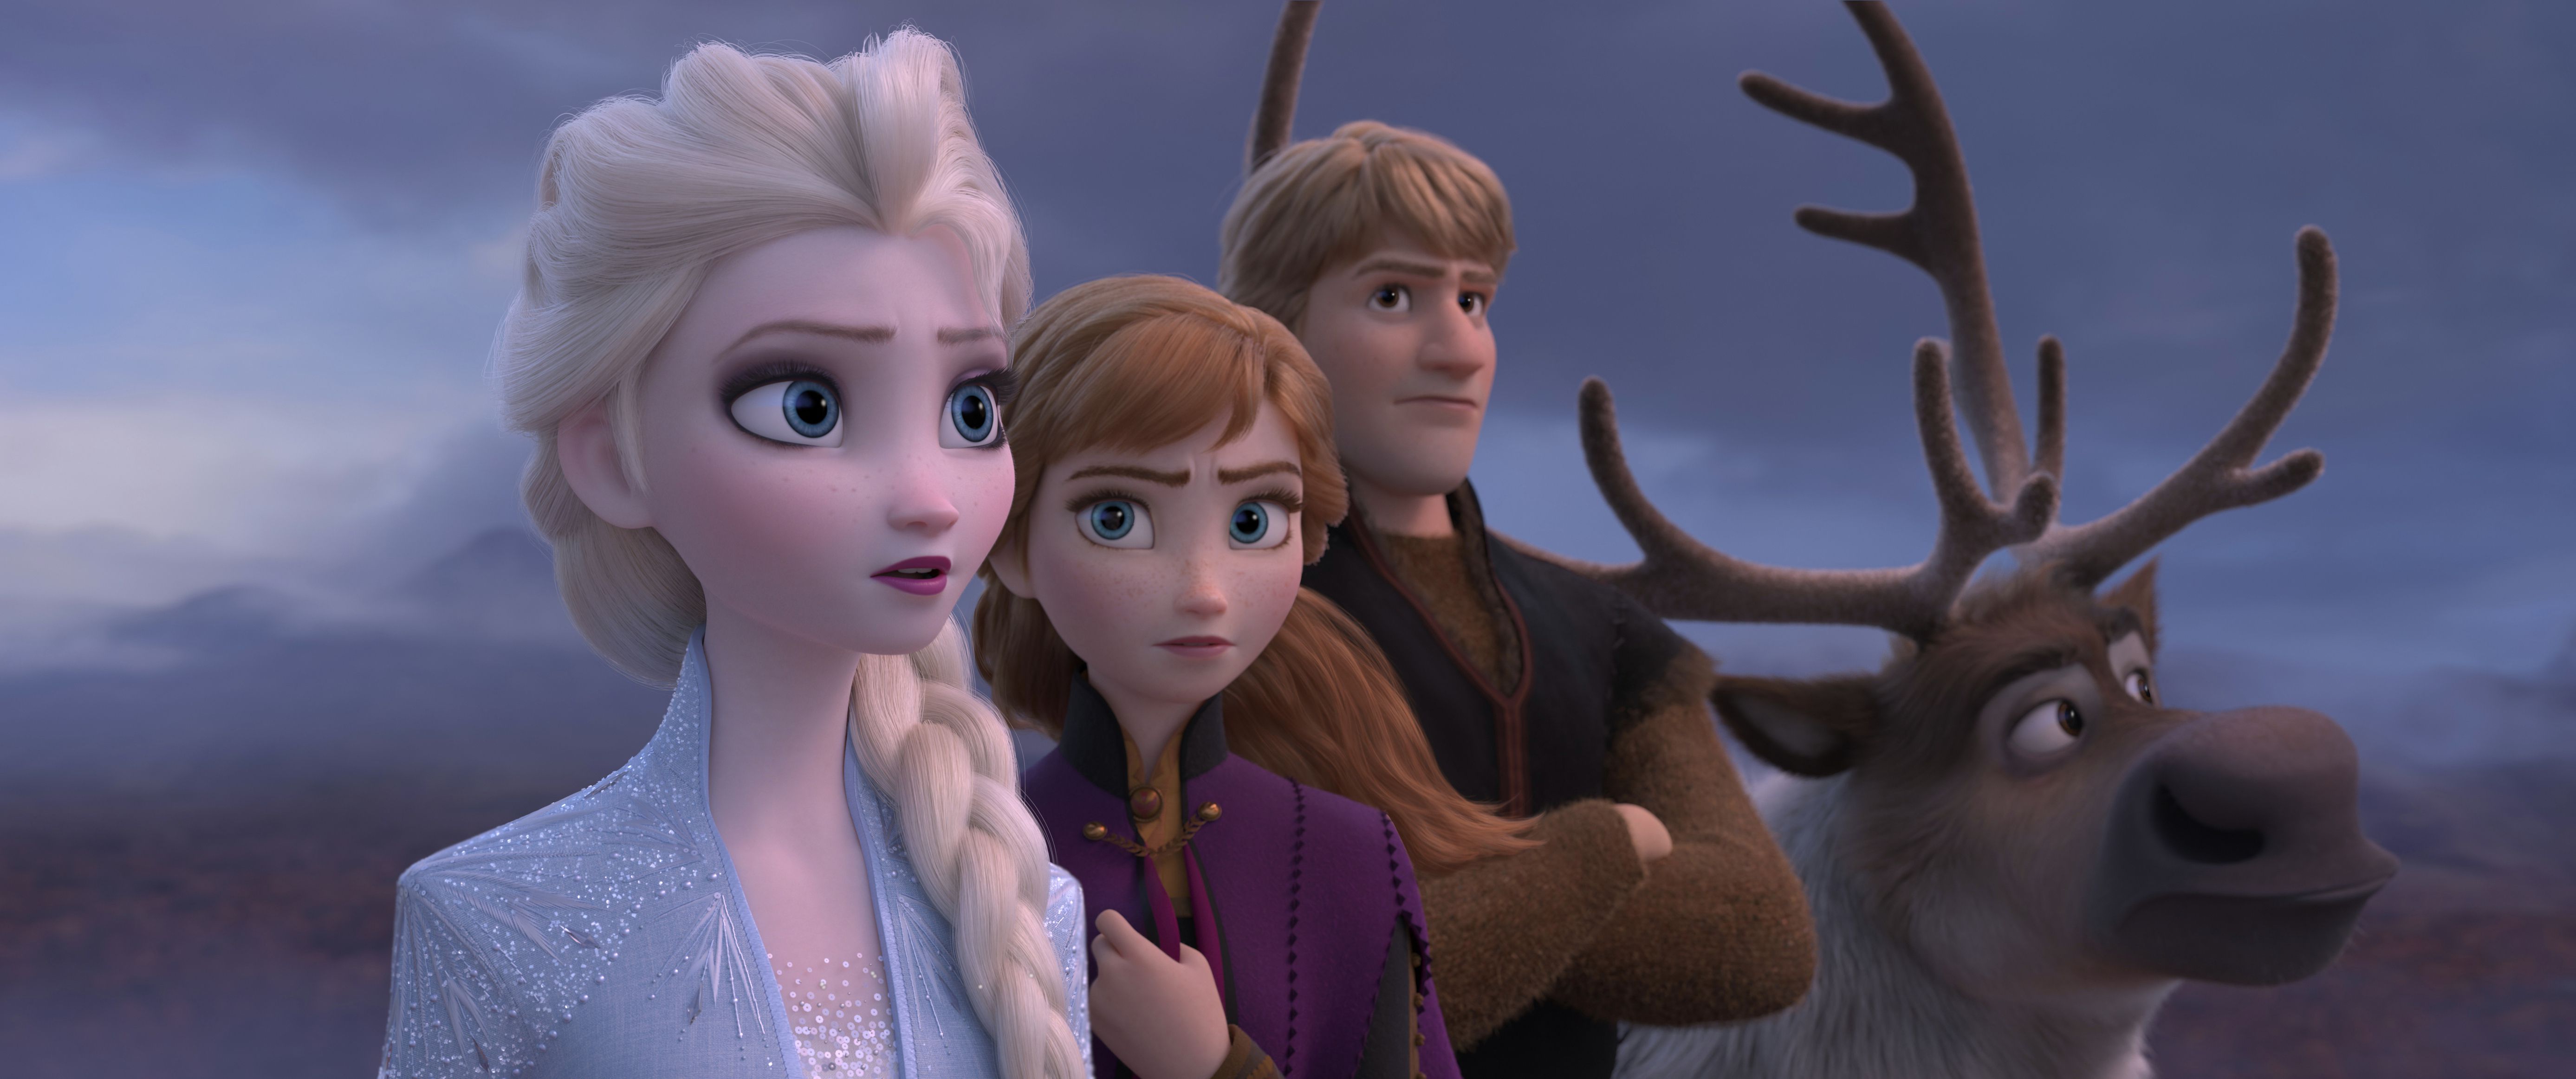 Jumanji: The Next Level' Unseats 'Frozen 2' at the Box Office